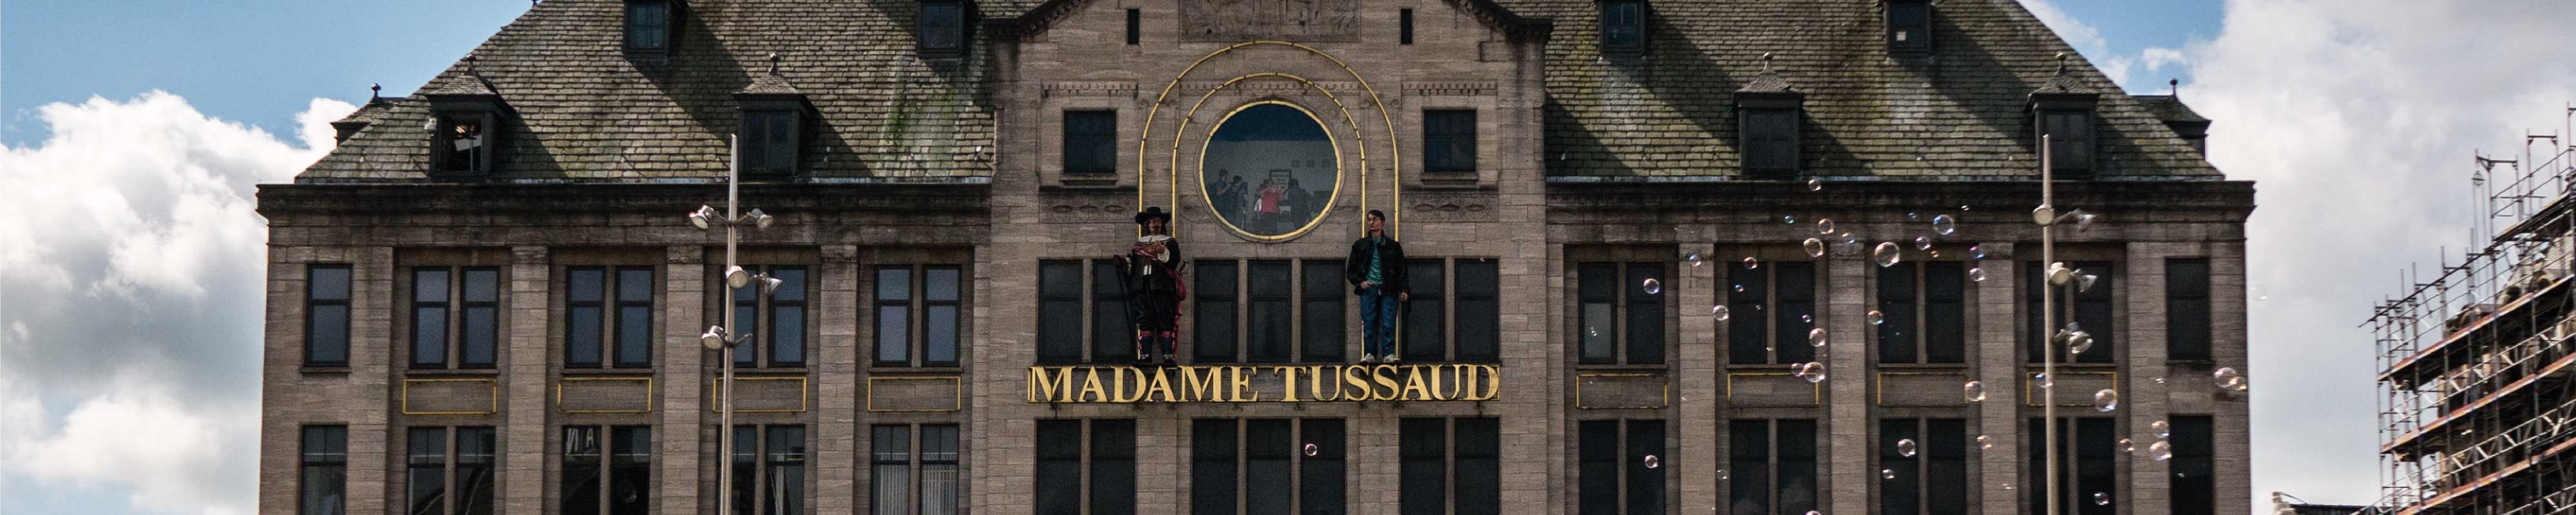 Consigna Equipaje | museo de Madame Tussauds en Londres - Nannybag